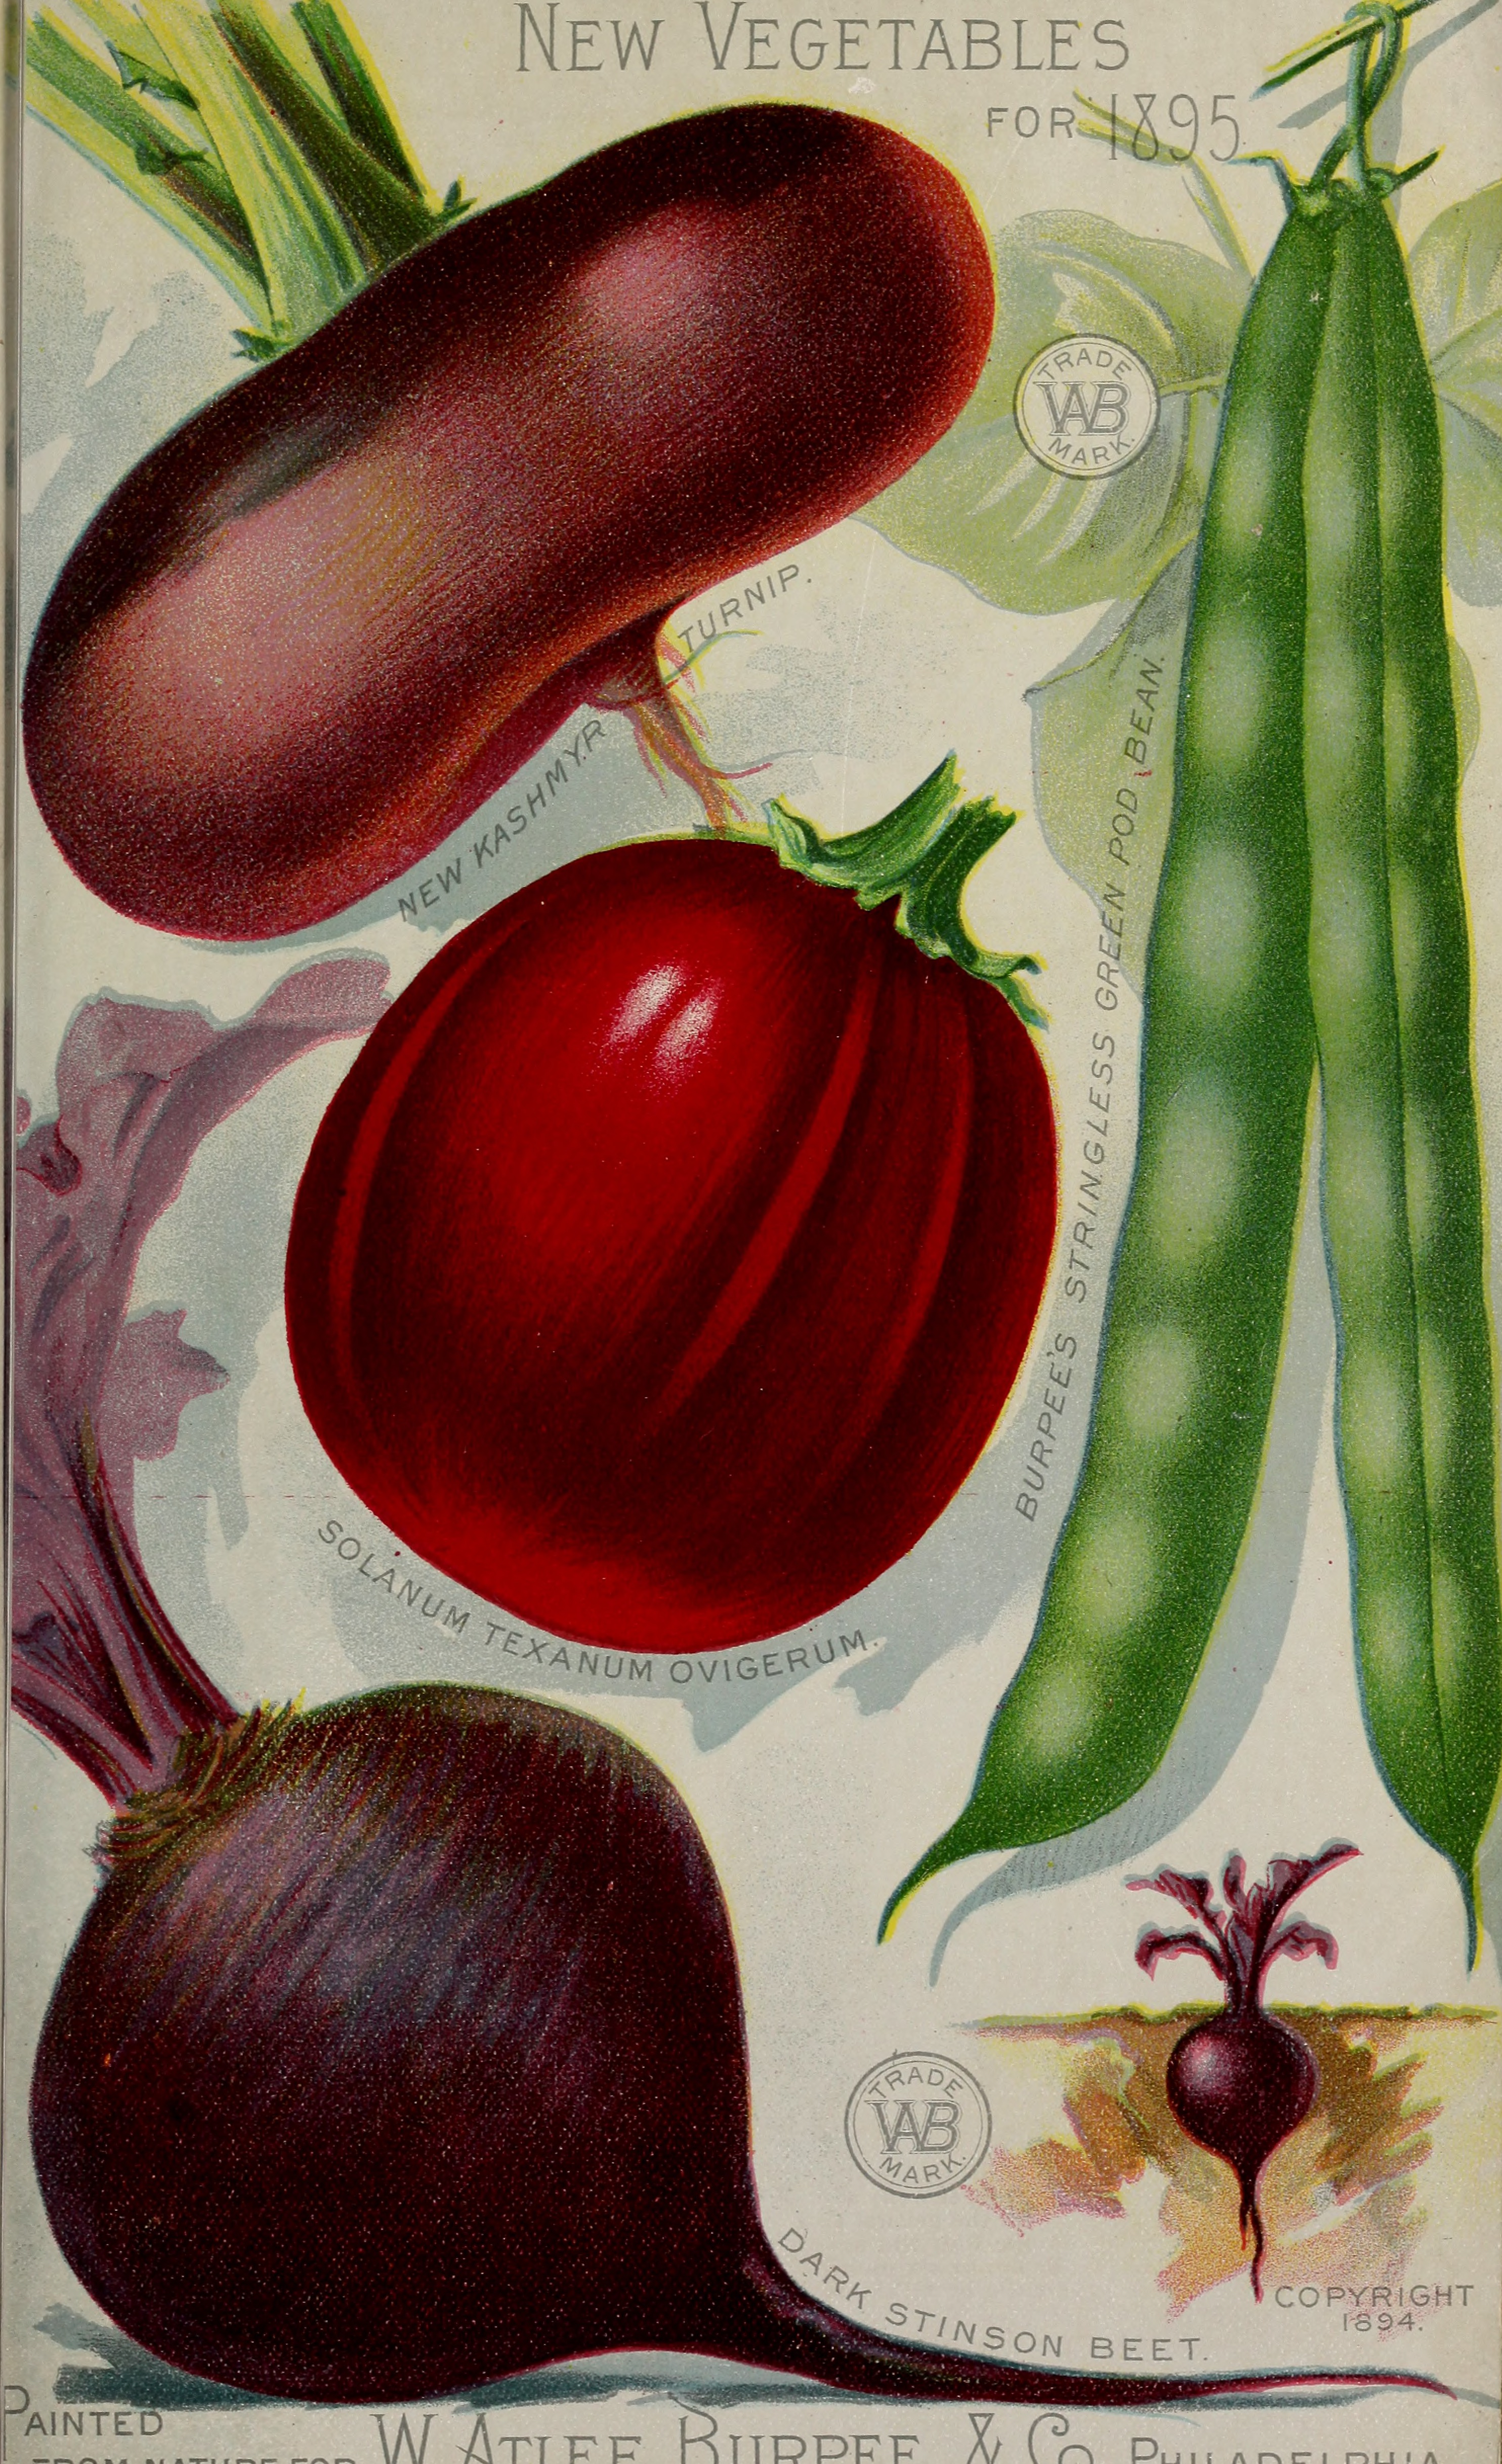 Burpee's farm annual - the best seeds that grow including rare novelties (1895) (19887803734)